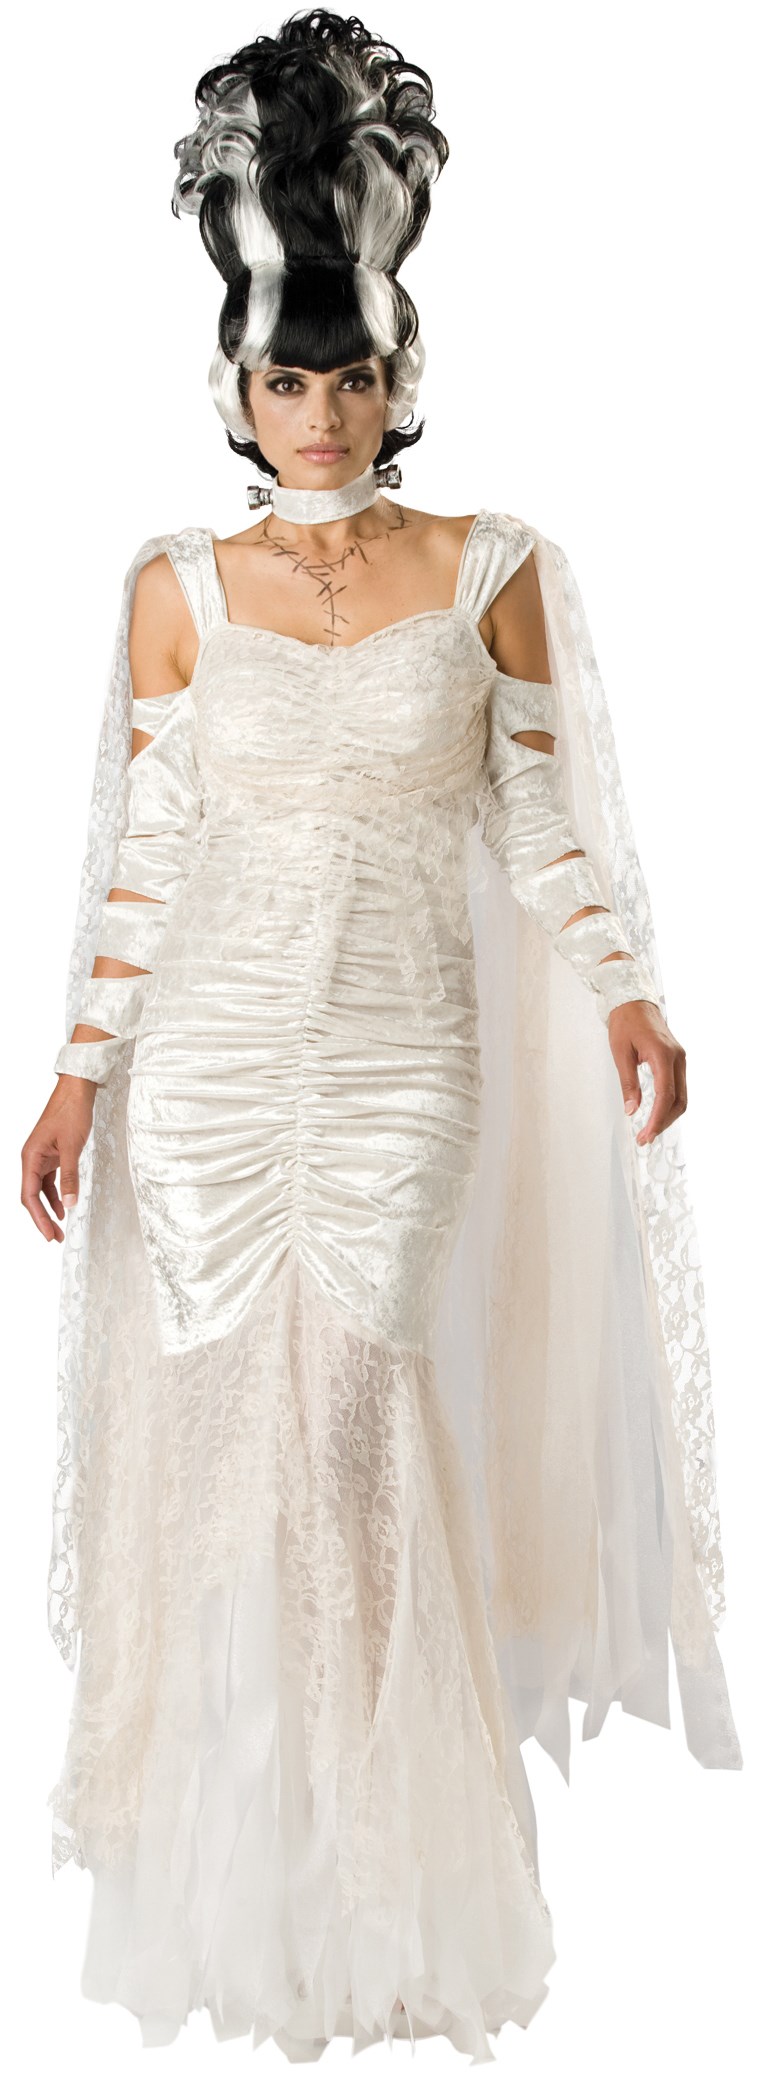 Bride of Frankenstein Elite Adult Costume | BuyCostumes.com